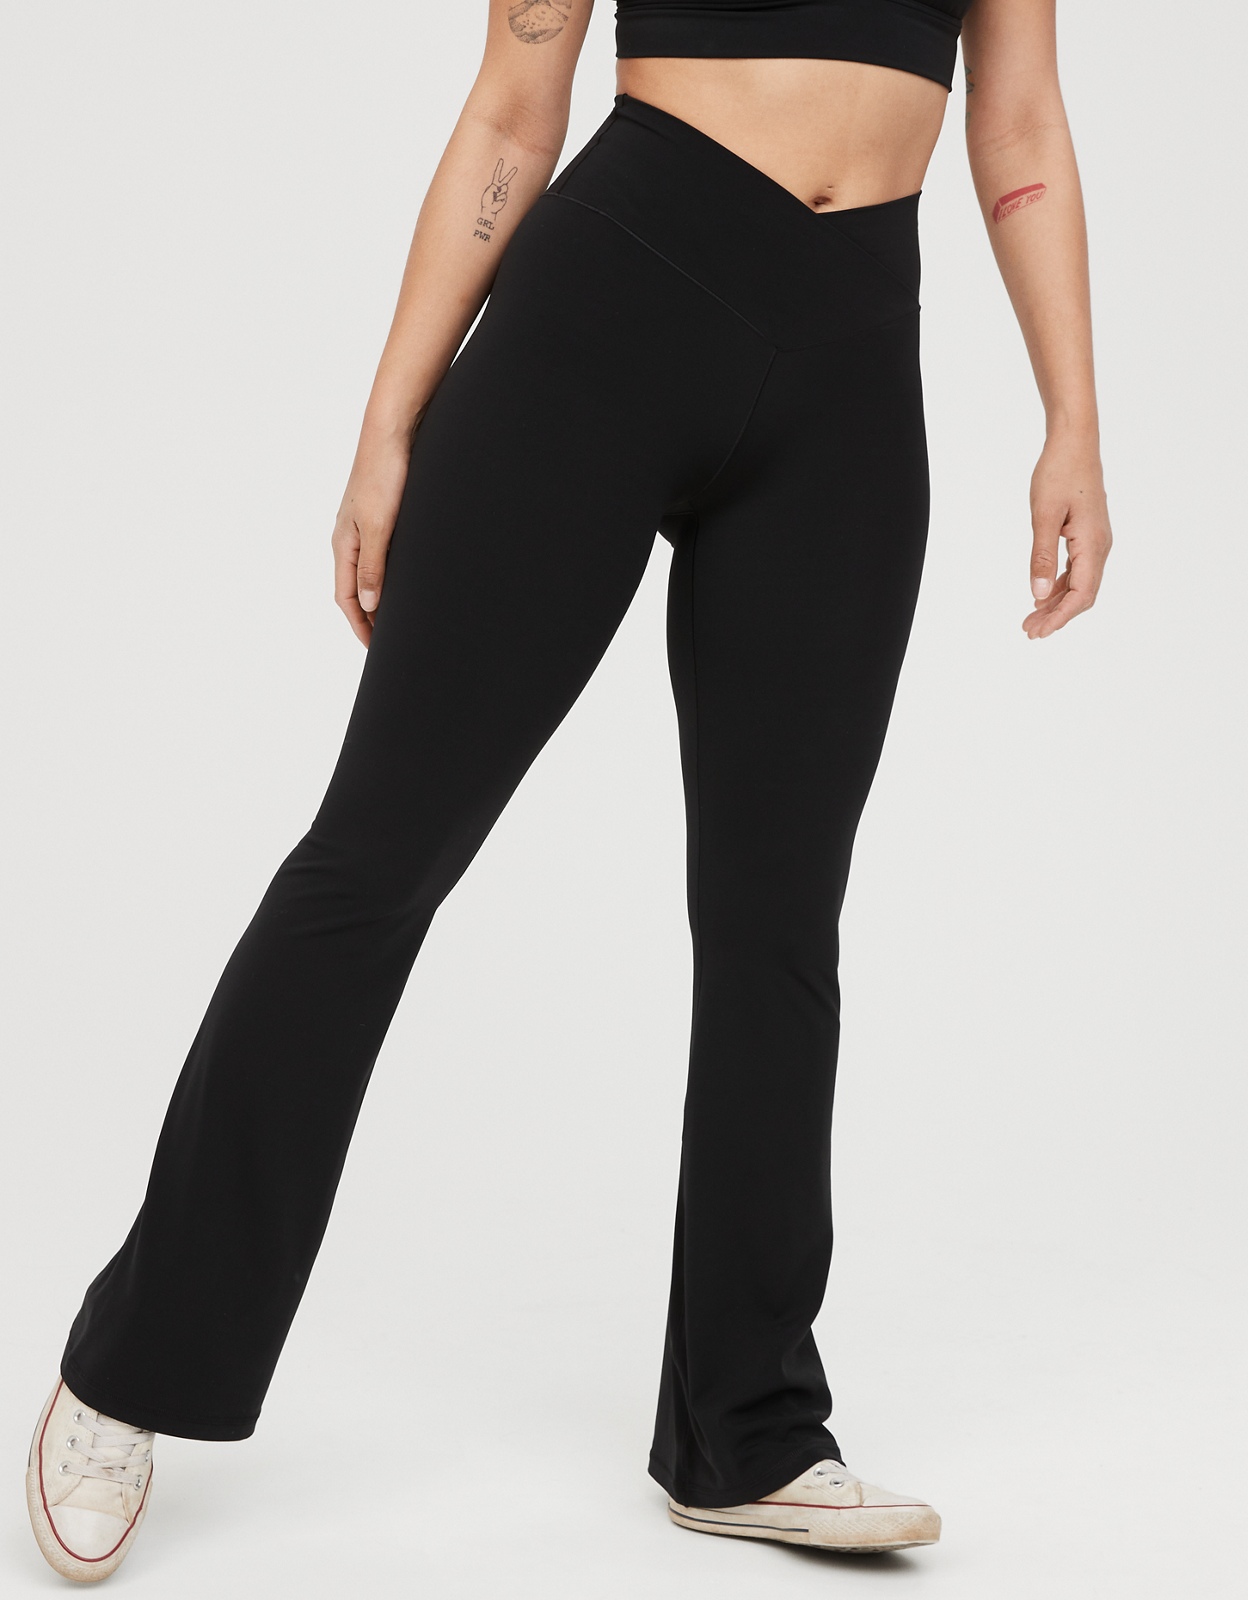 COPYLEAF Women's Flare Yogo Pants with Pockets-V Crossover High Waisted  Bootcut Yoga Leggings-Flare Bell Bottom Leggings, Black, M price in Saudi  Arabia,  Saudi Arabia